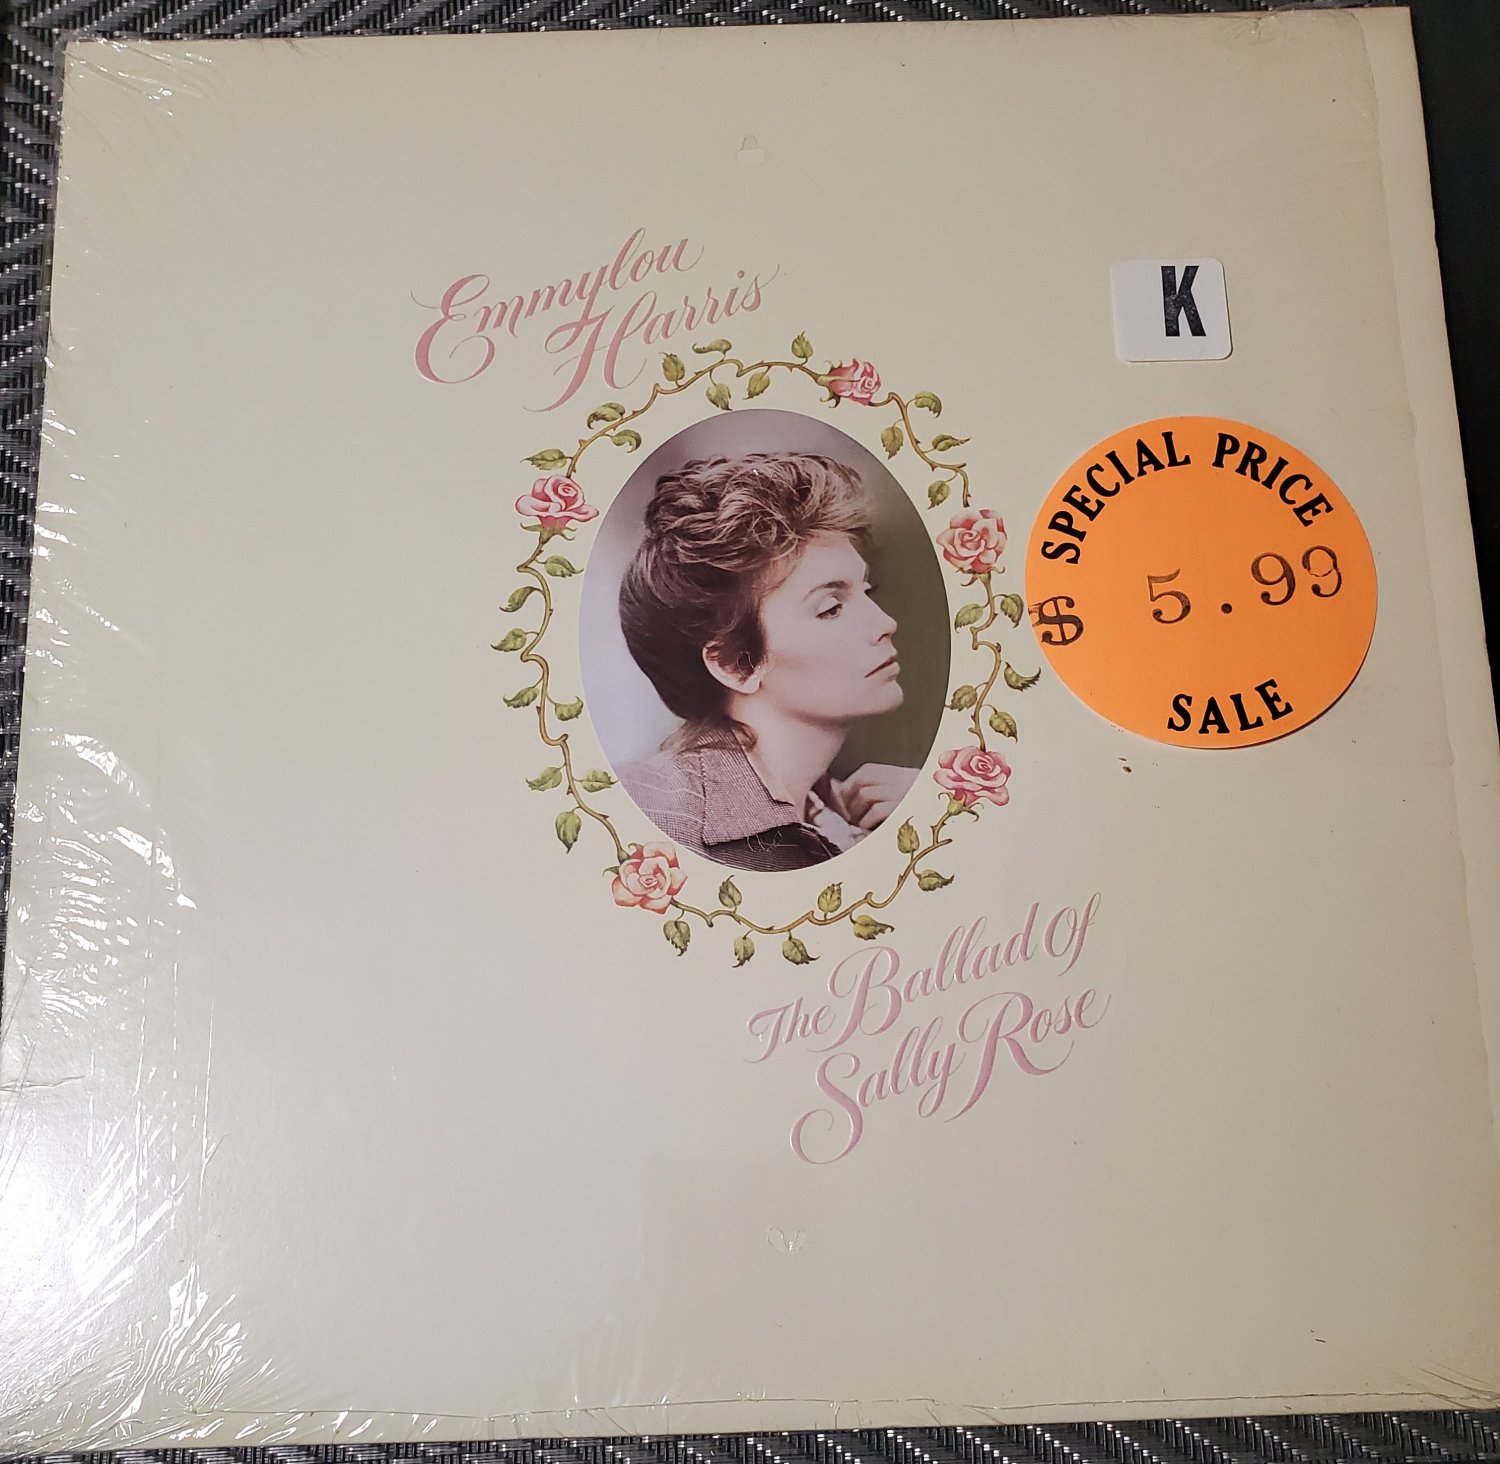 Emmylou Harris The Ballad Of Sally Rose LP 33 RPM Record Album Vinyl